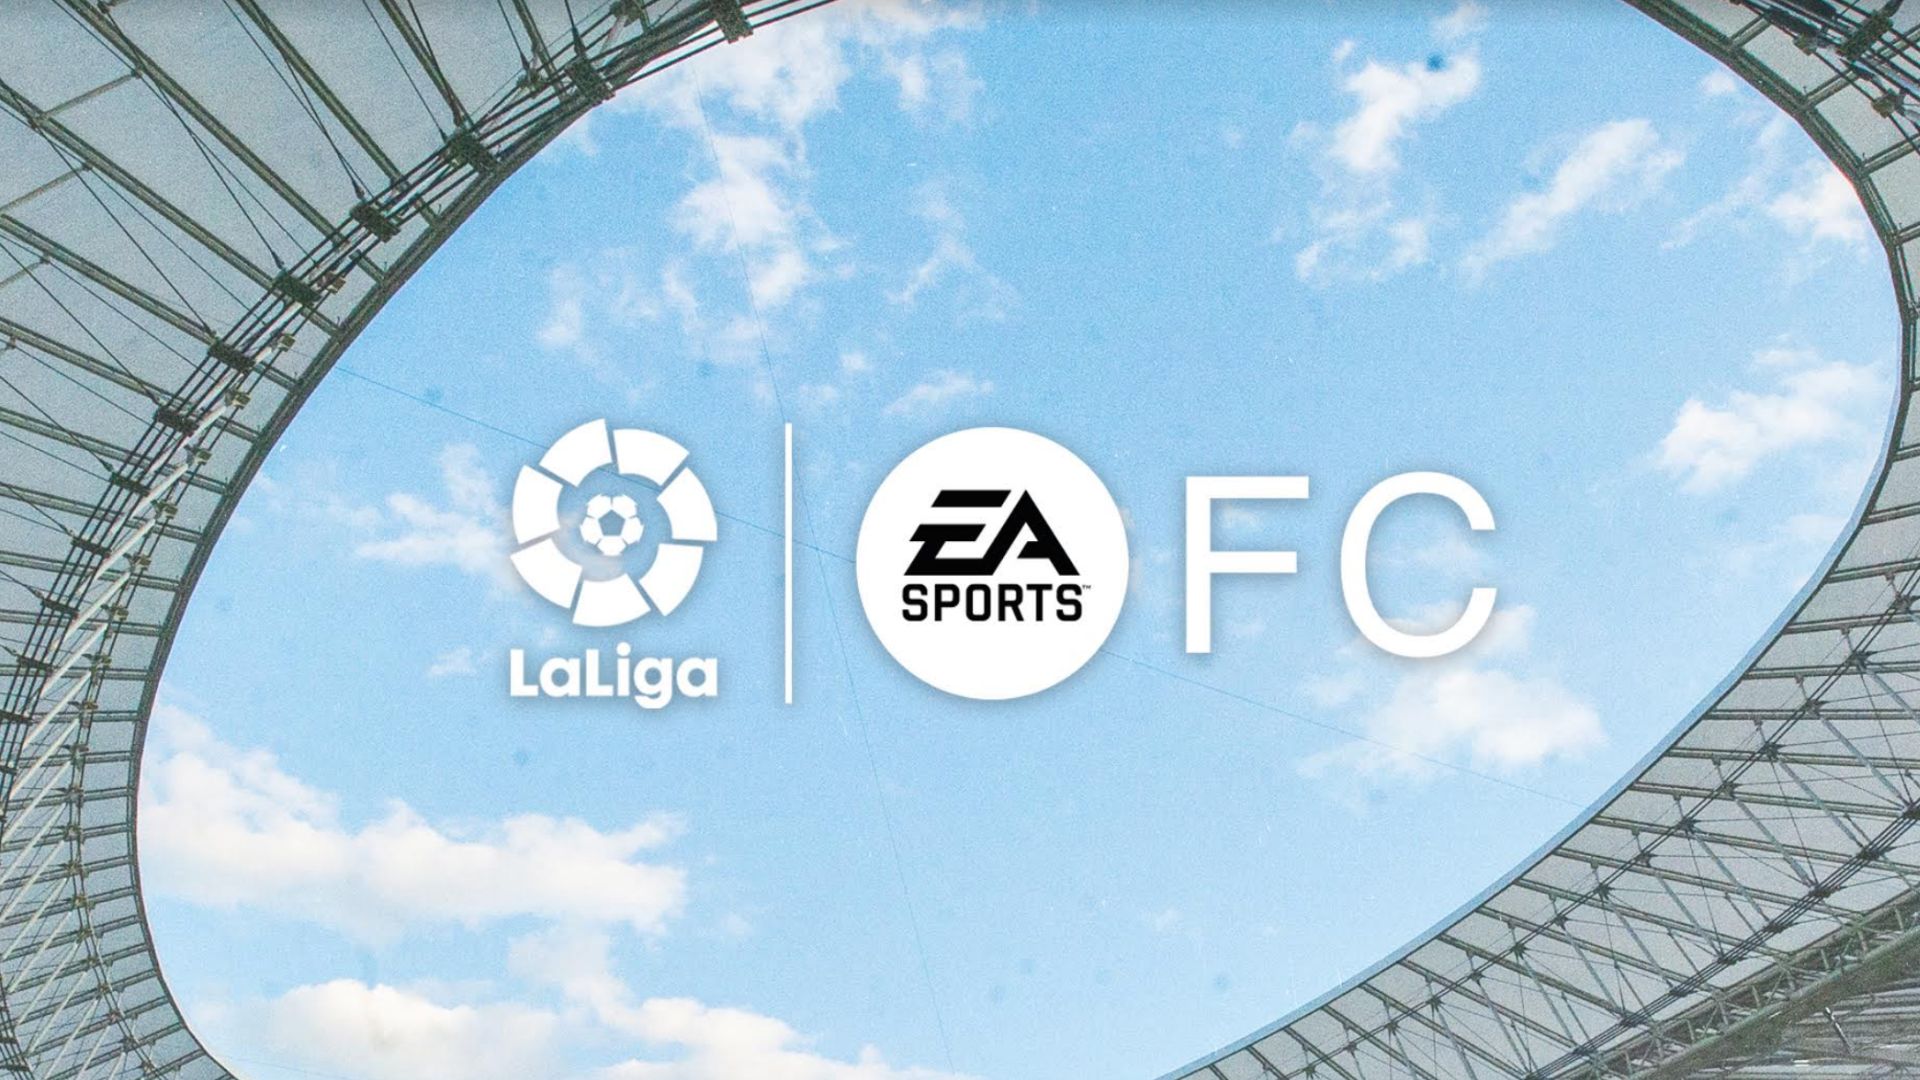 EA SPORTS set to sponsor La Liga ahead of EA FC launch in 2023